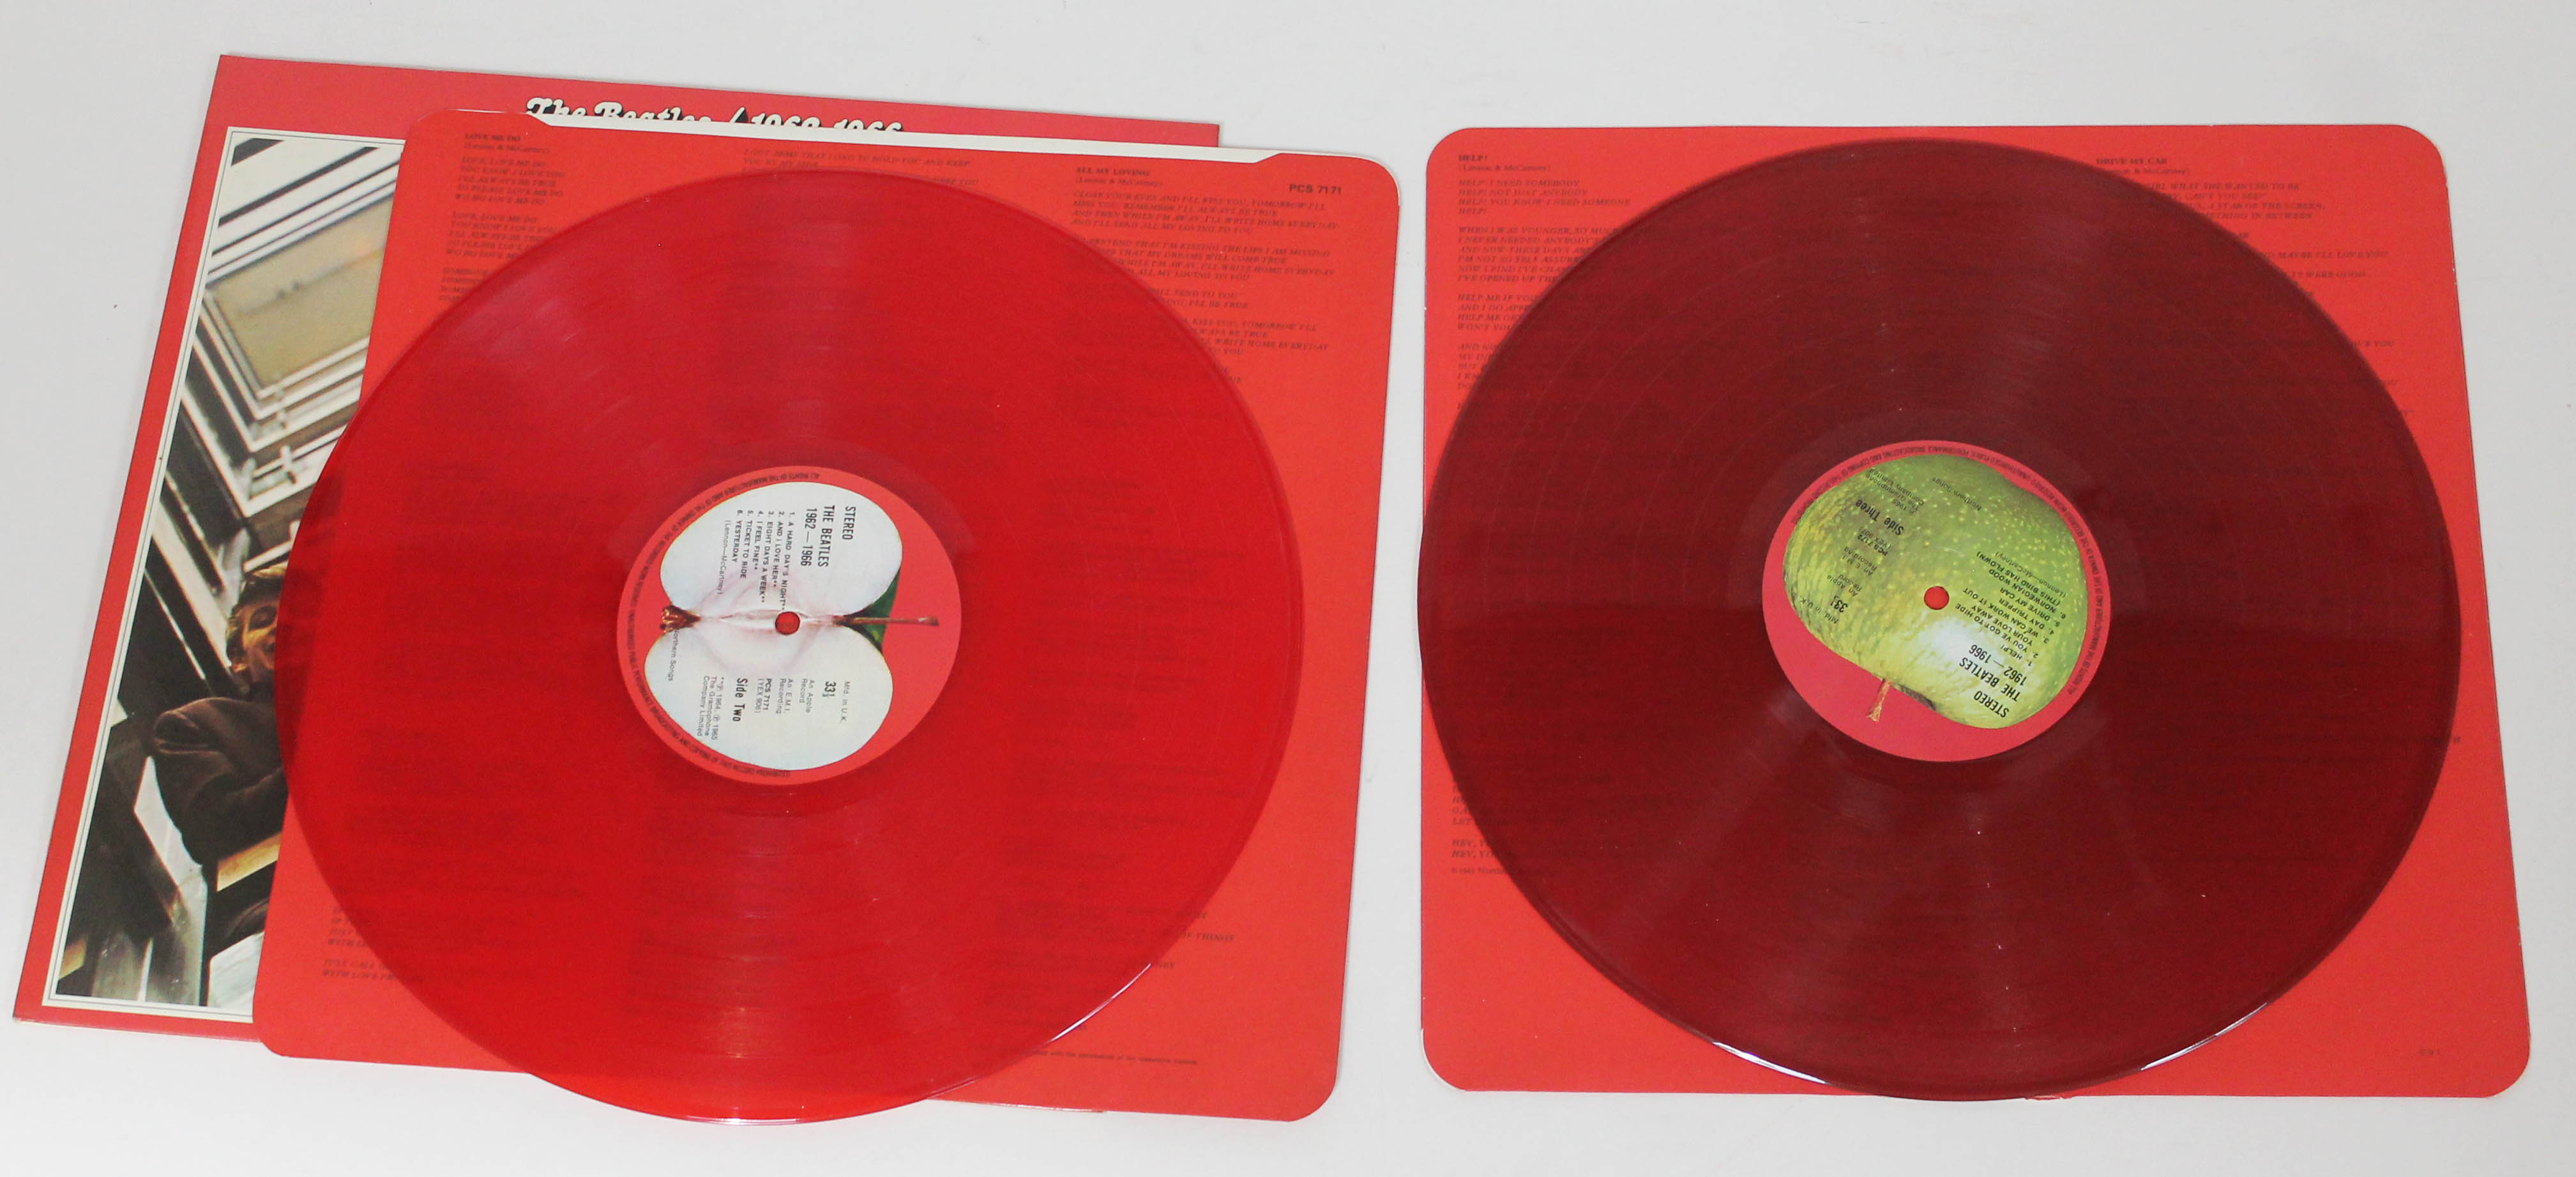 The Beatles - 1962-1966 gatefold double LP red vinyl. - Image 4 of 5